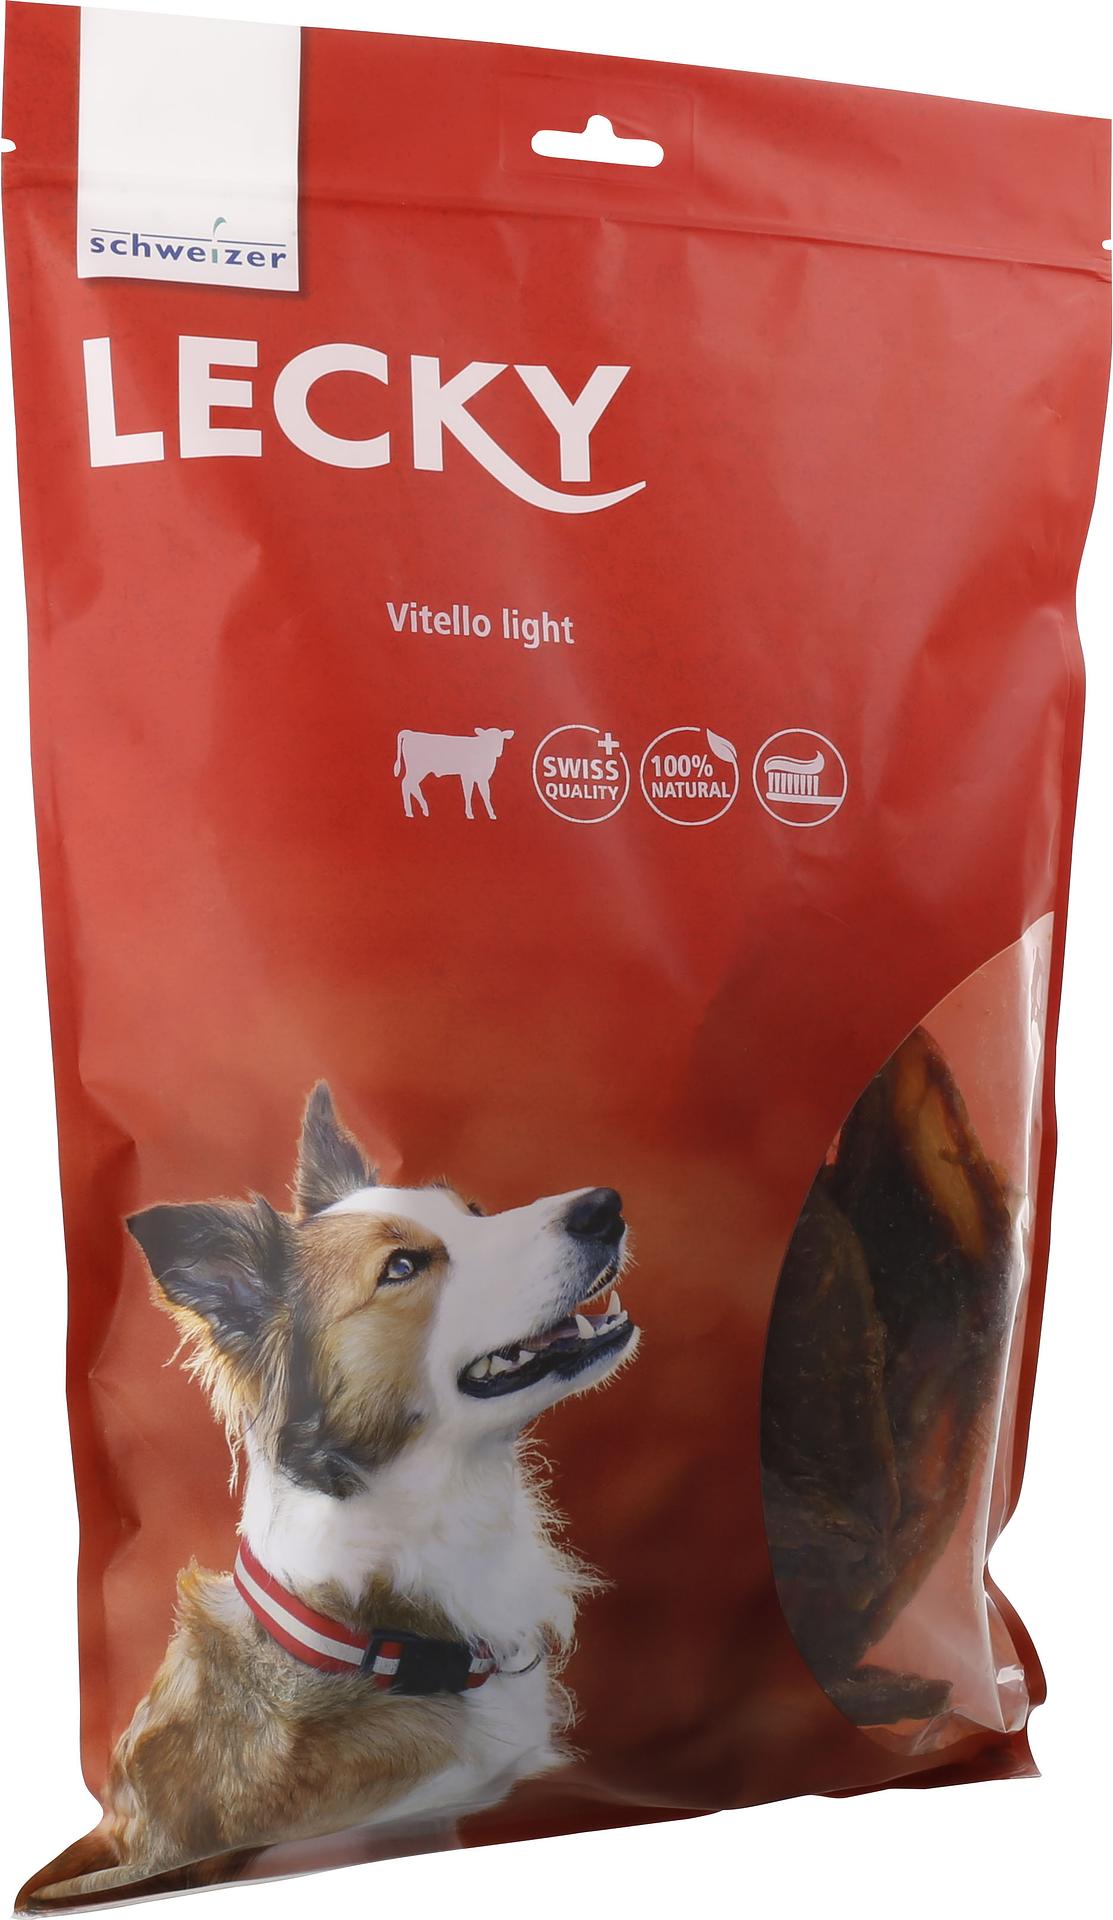 Lecky Vitello light, 400g